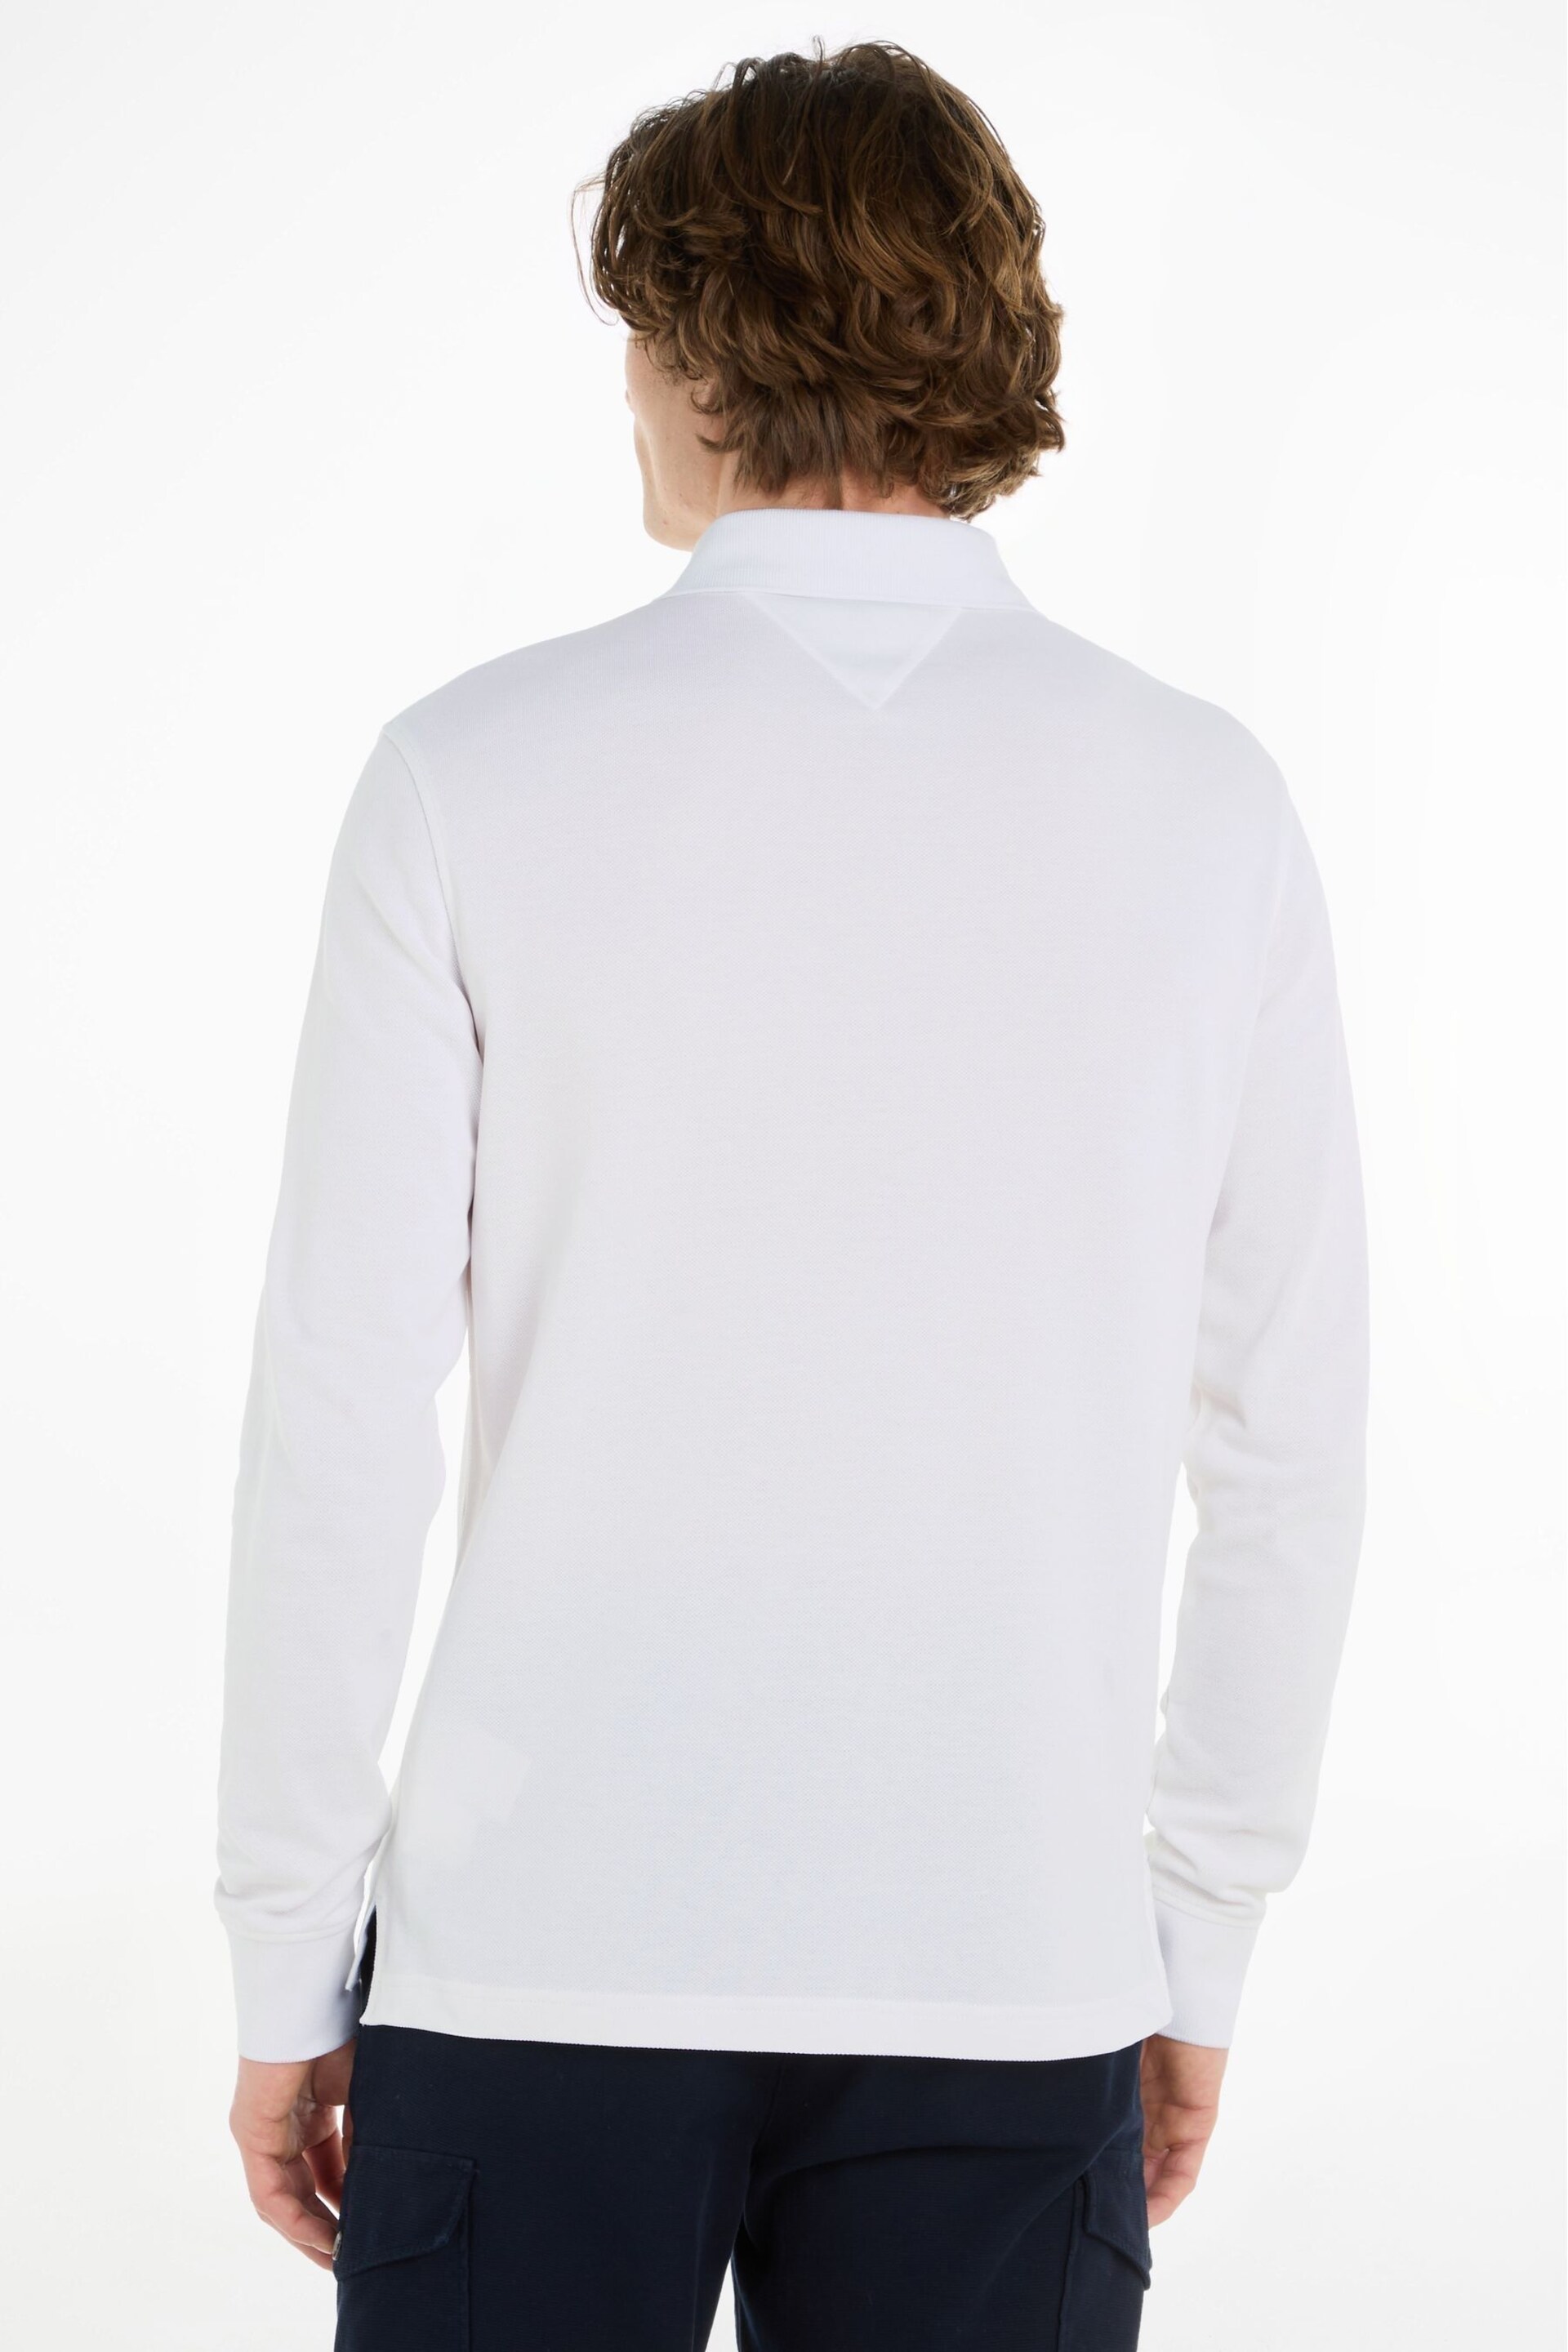 Tommy Hilfiger 1985 Regular Long Sleeve Polo Shirt - Image 2 of 6